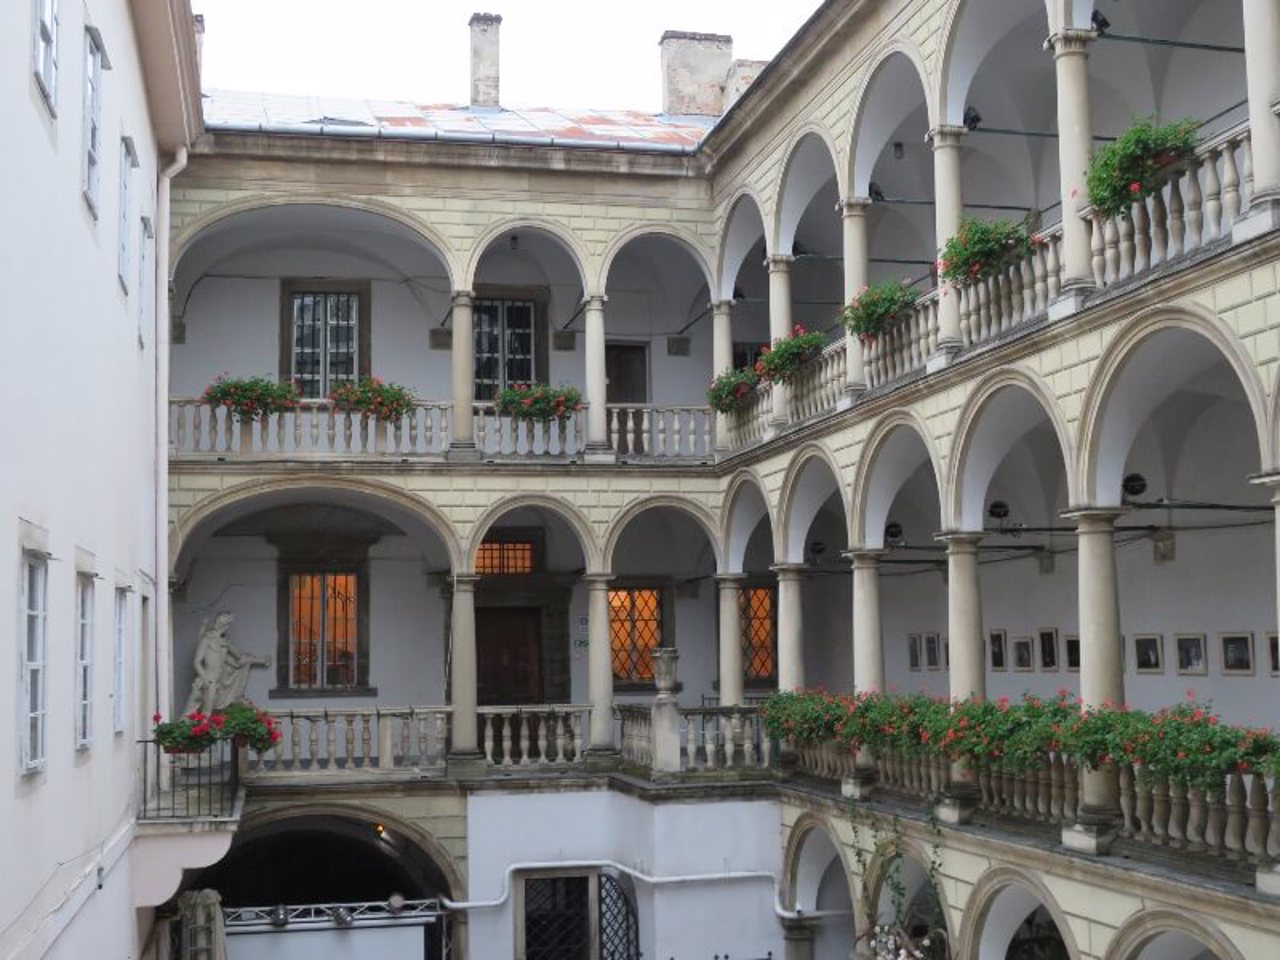 Kornyakt Palace (Italian Courtyard), Lviv